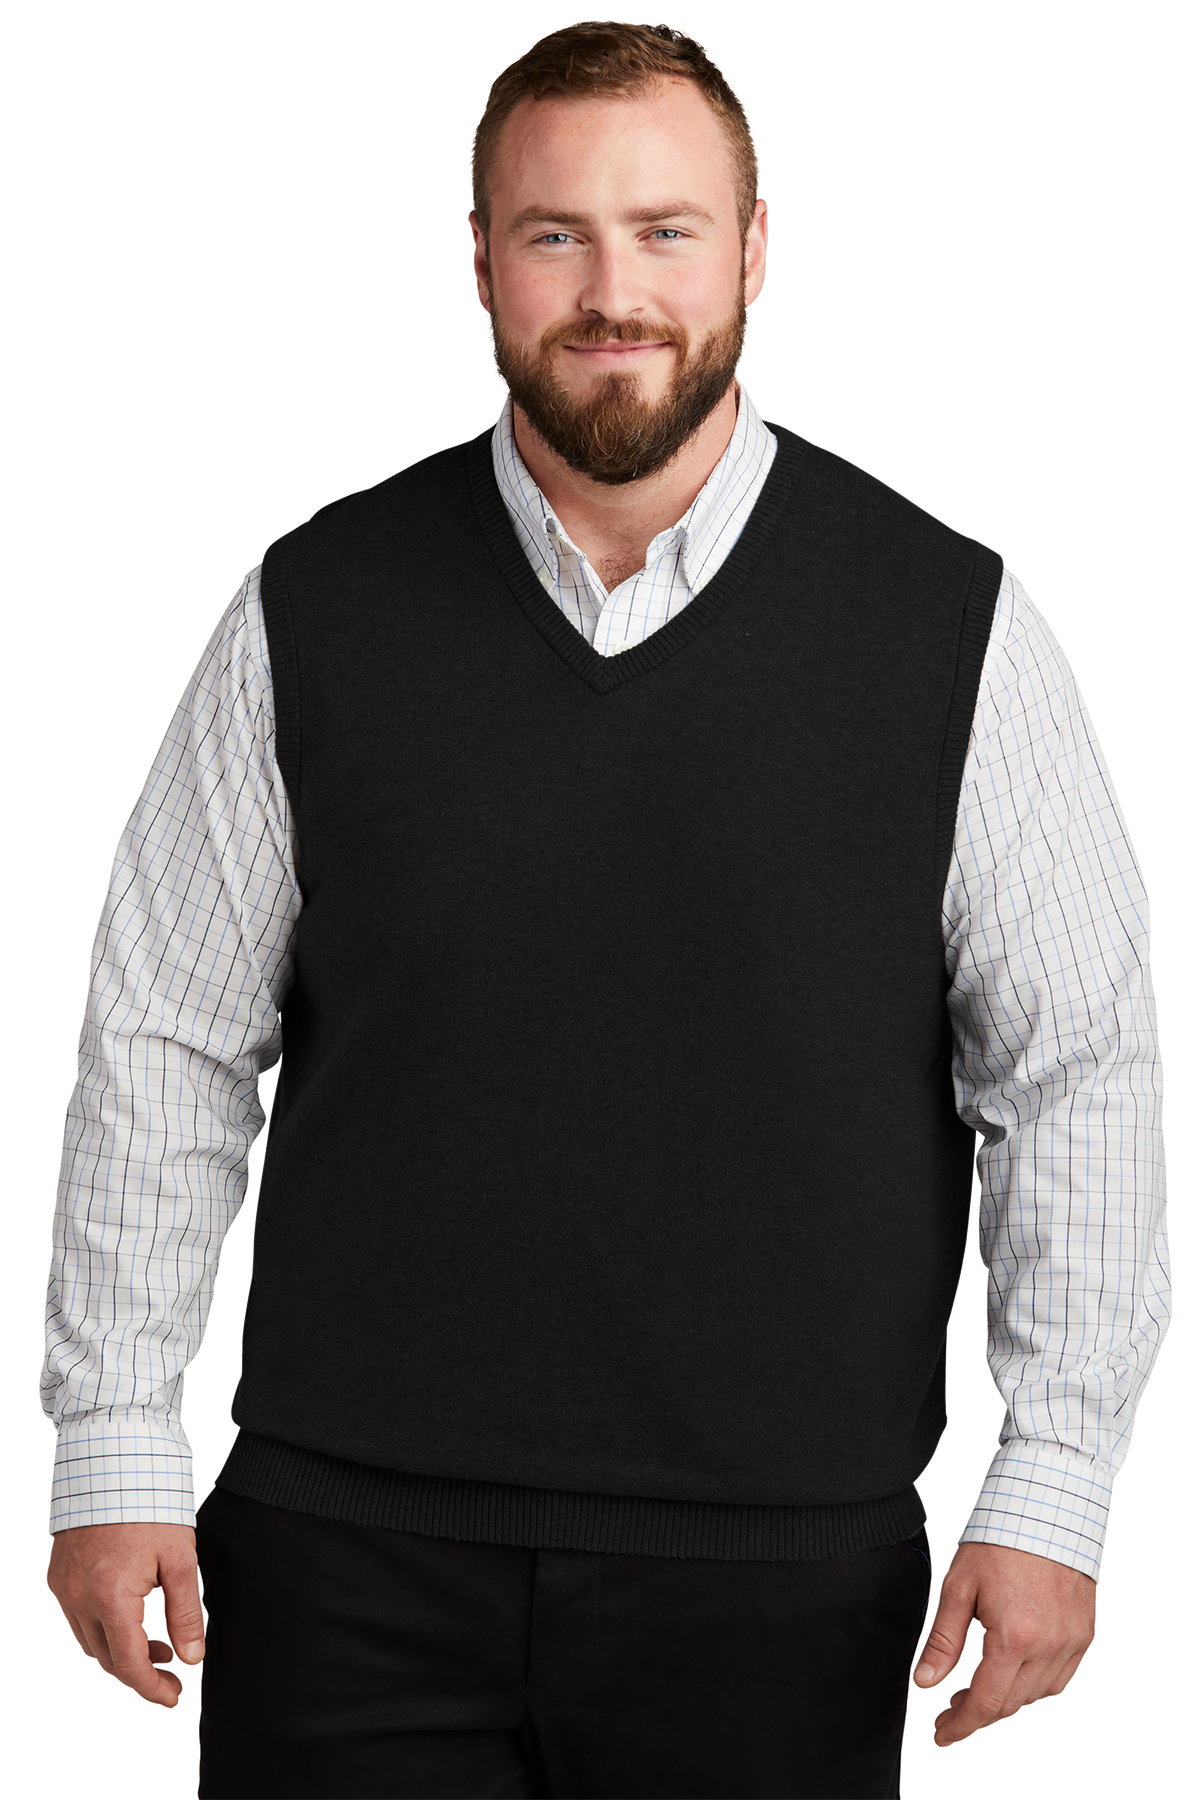 Sweater Vest Men Giá Tốt T052023  Mua tại Lazadavn